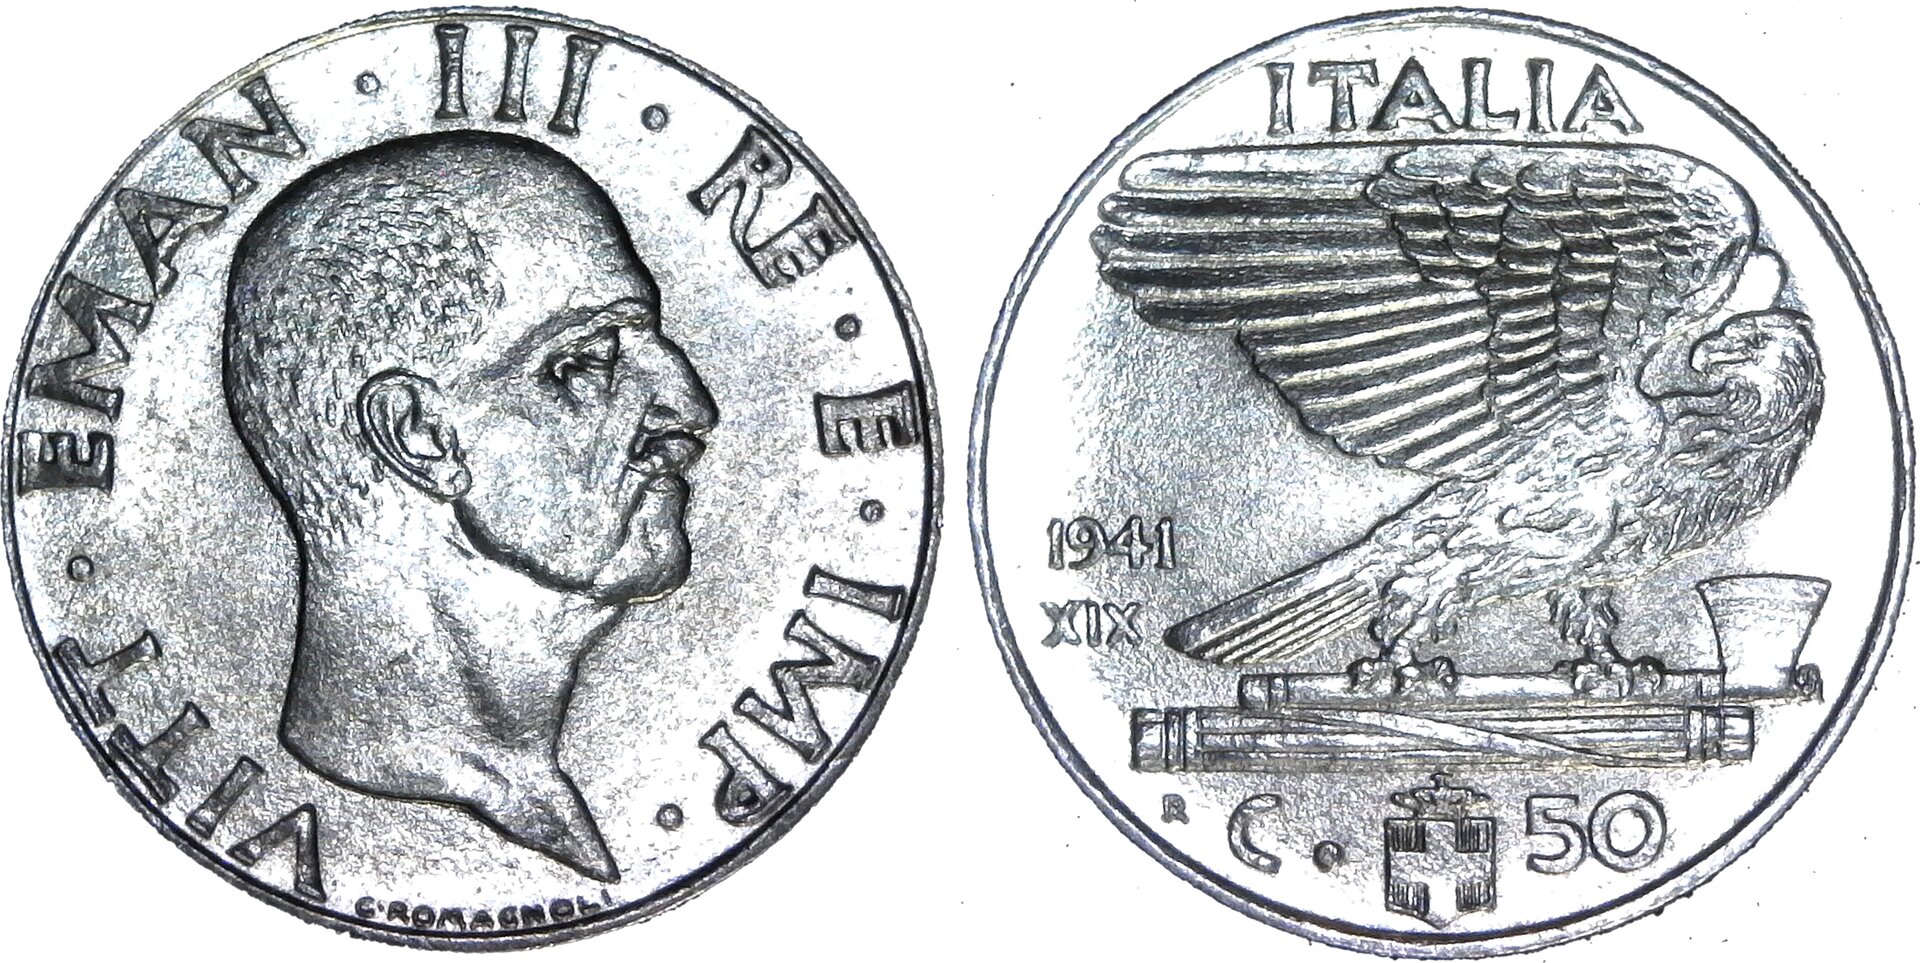 Italy 50 Centisimi 1941 obverse-side-cutout.jpg